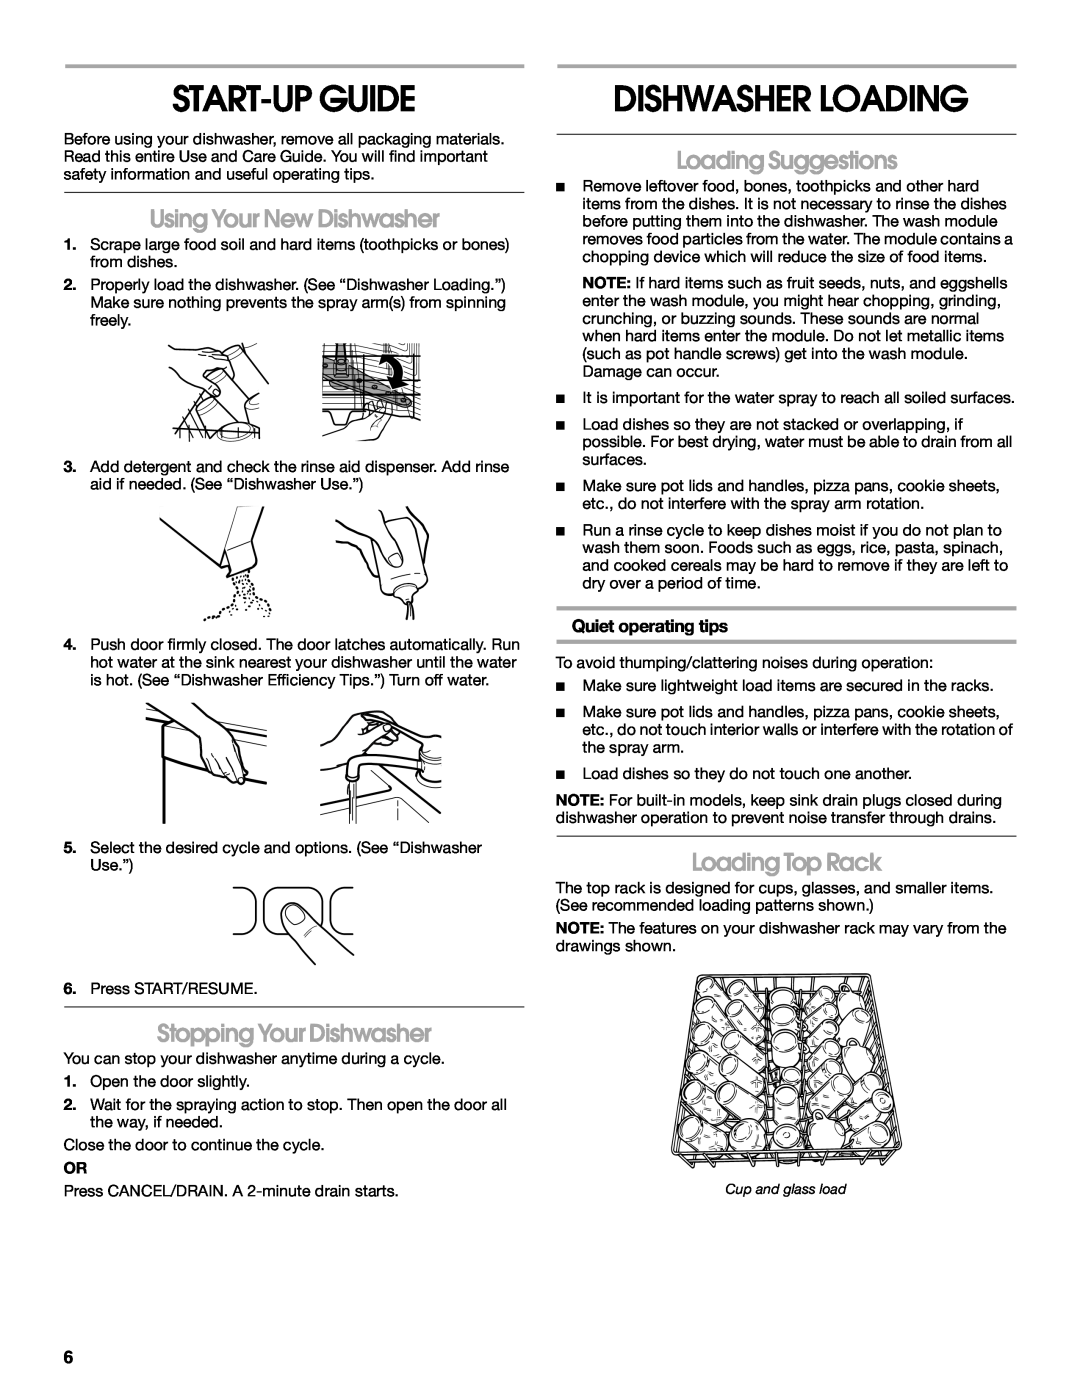 Whirlpool TUD6900 manual Start-Up Guide, Dishwasher Loading, Using Your New Dishwasher, Stopping Your Dishwasher 